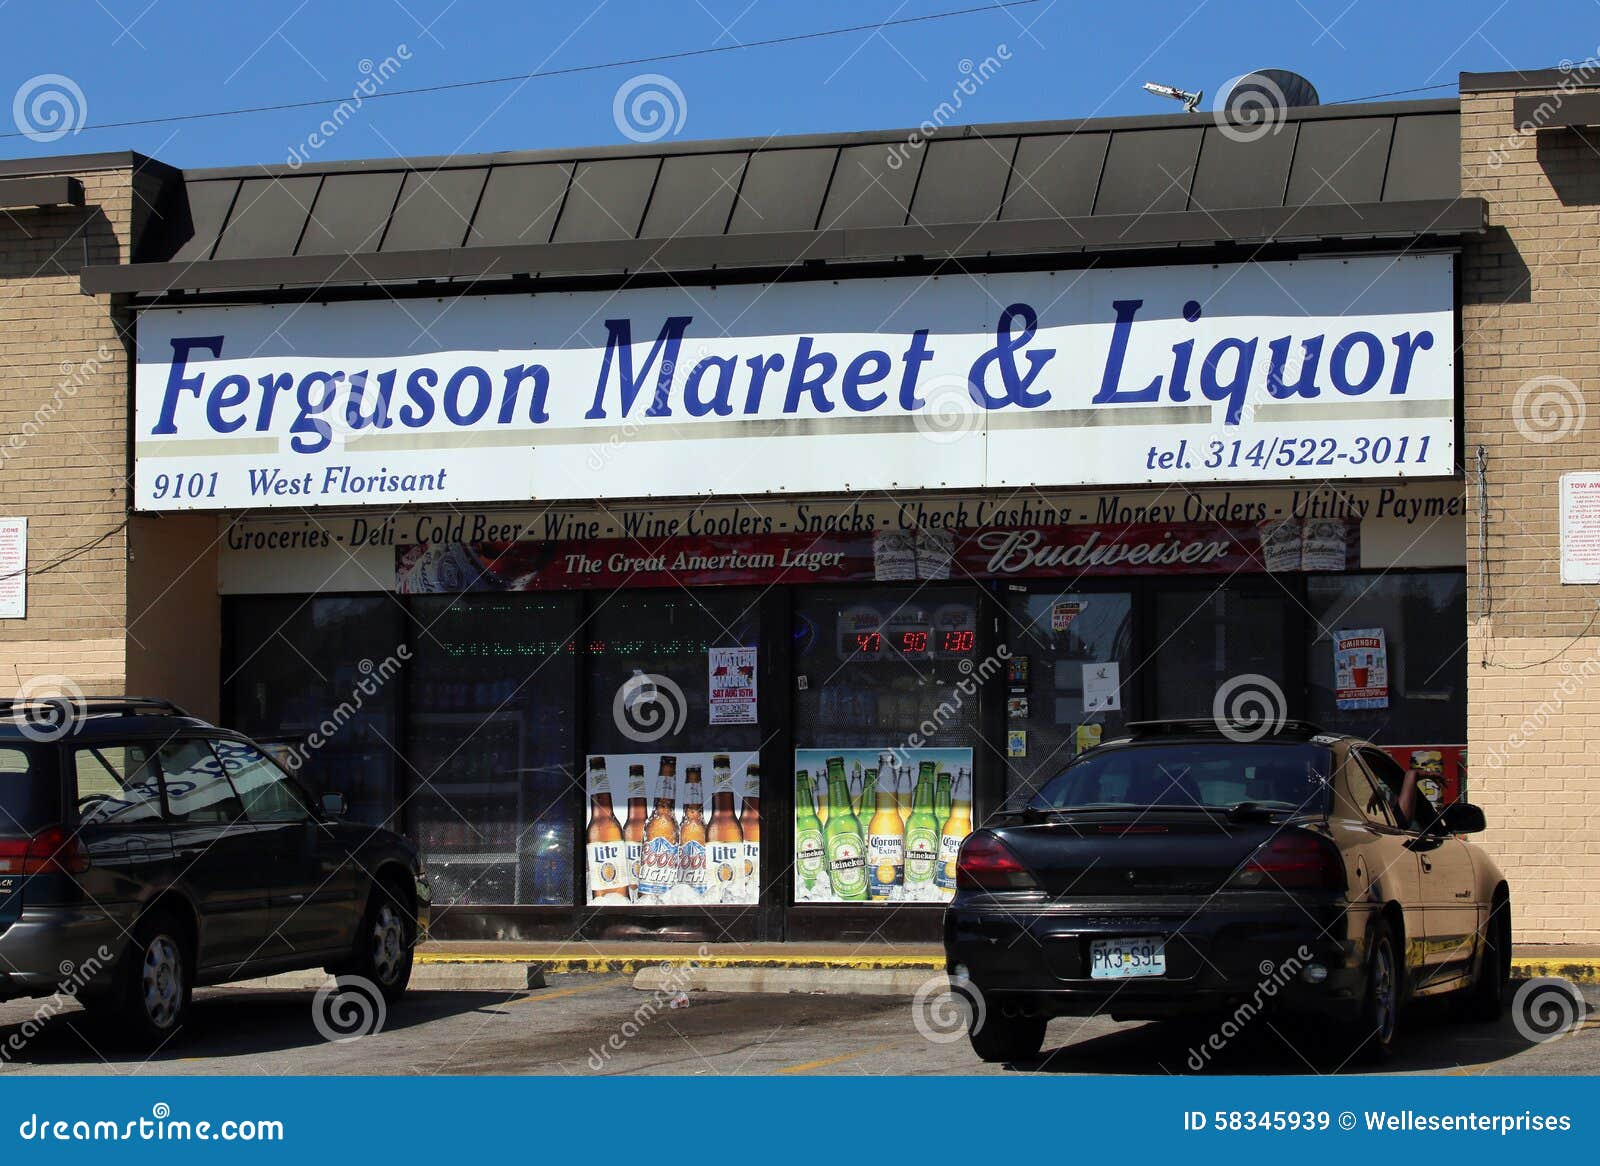 Ferguson Market & Liquor Editorial Stock Image - Image: 58345939